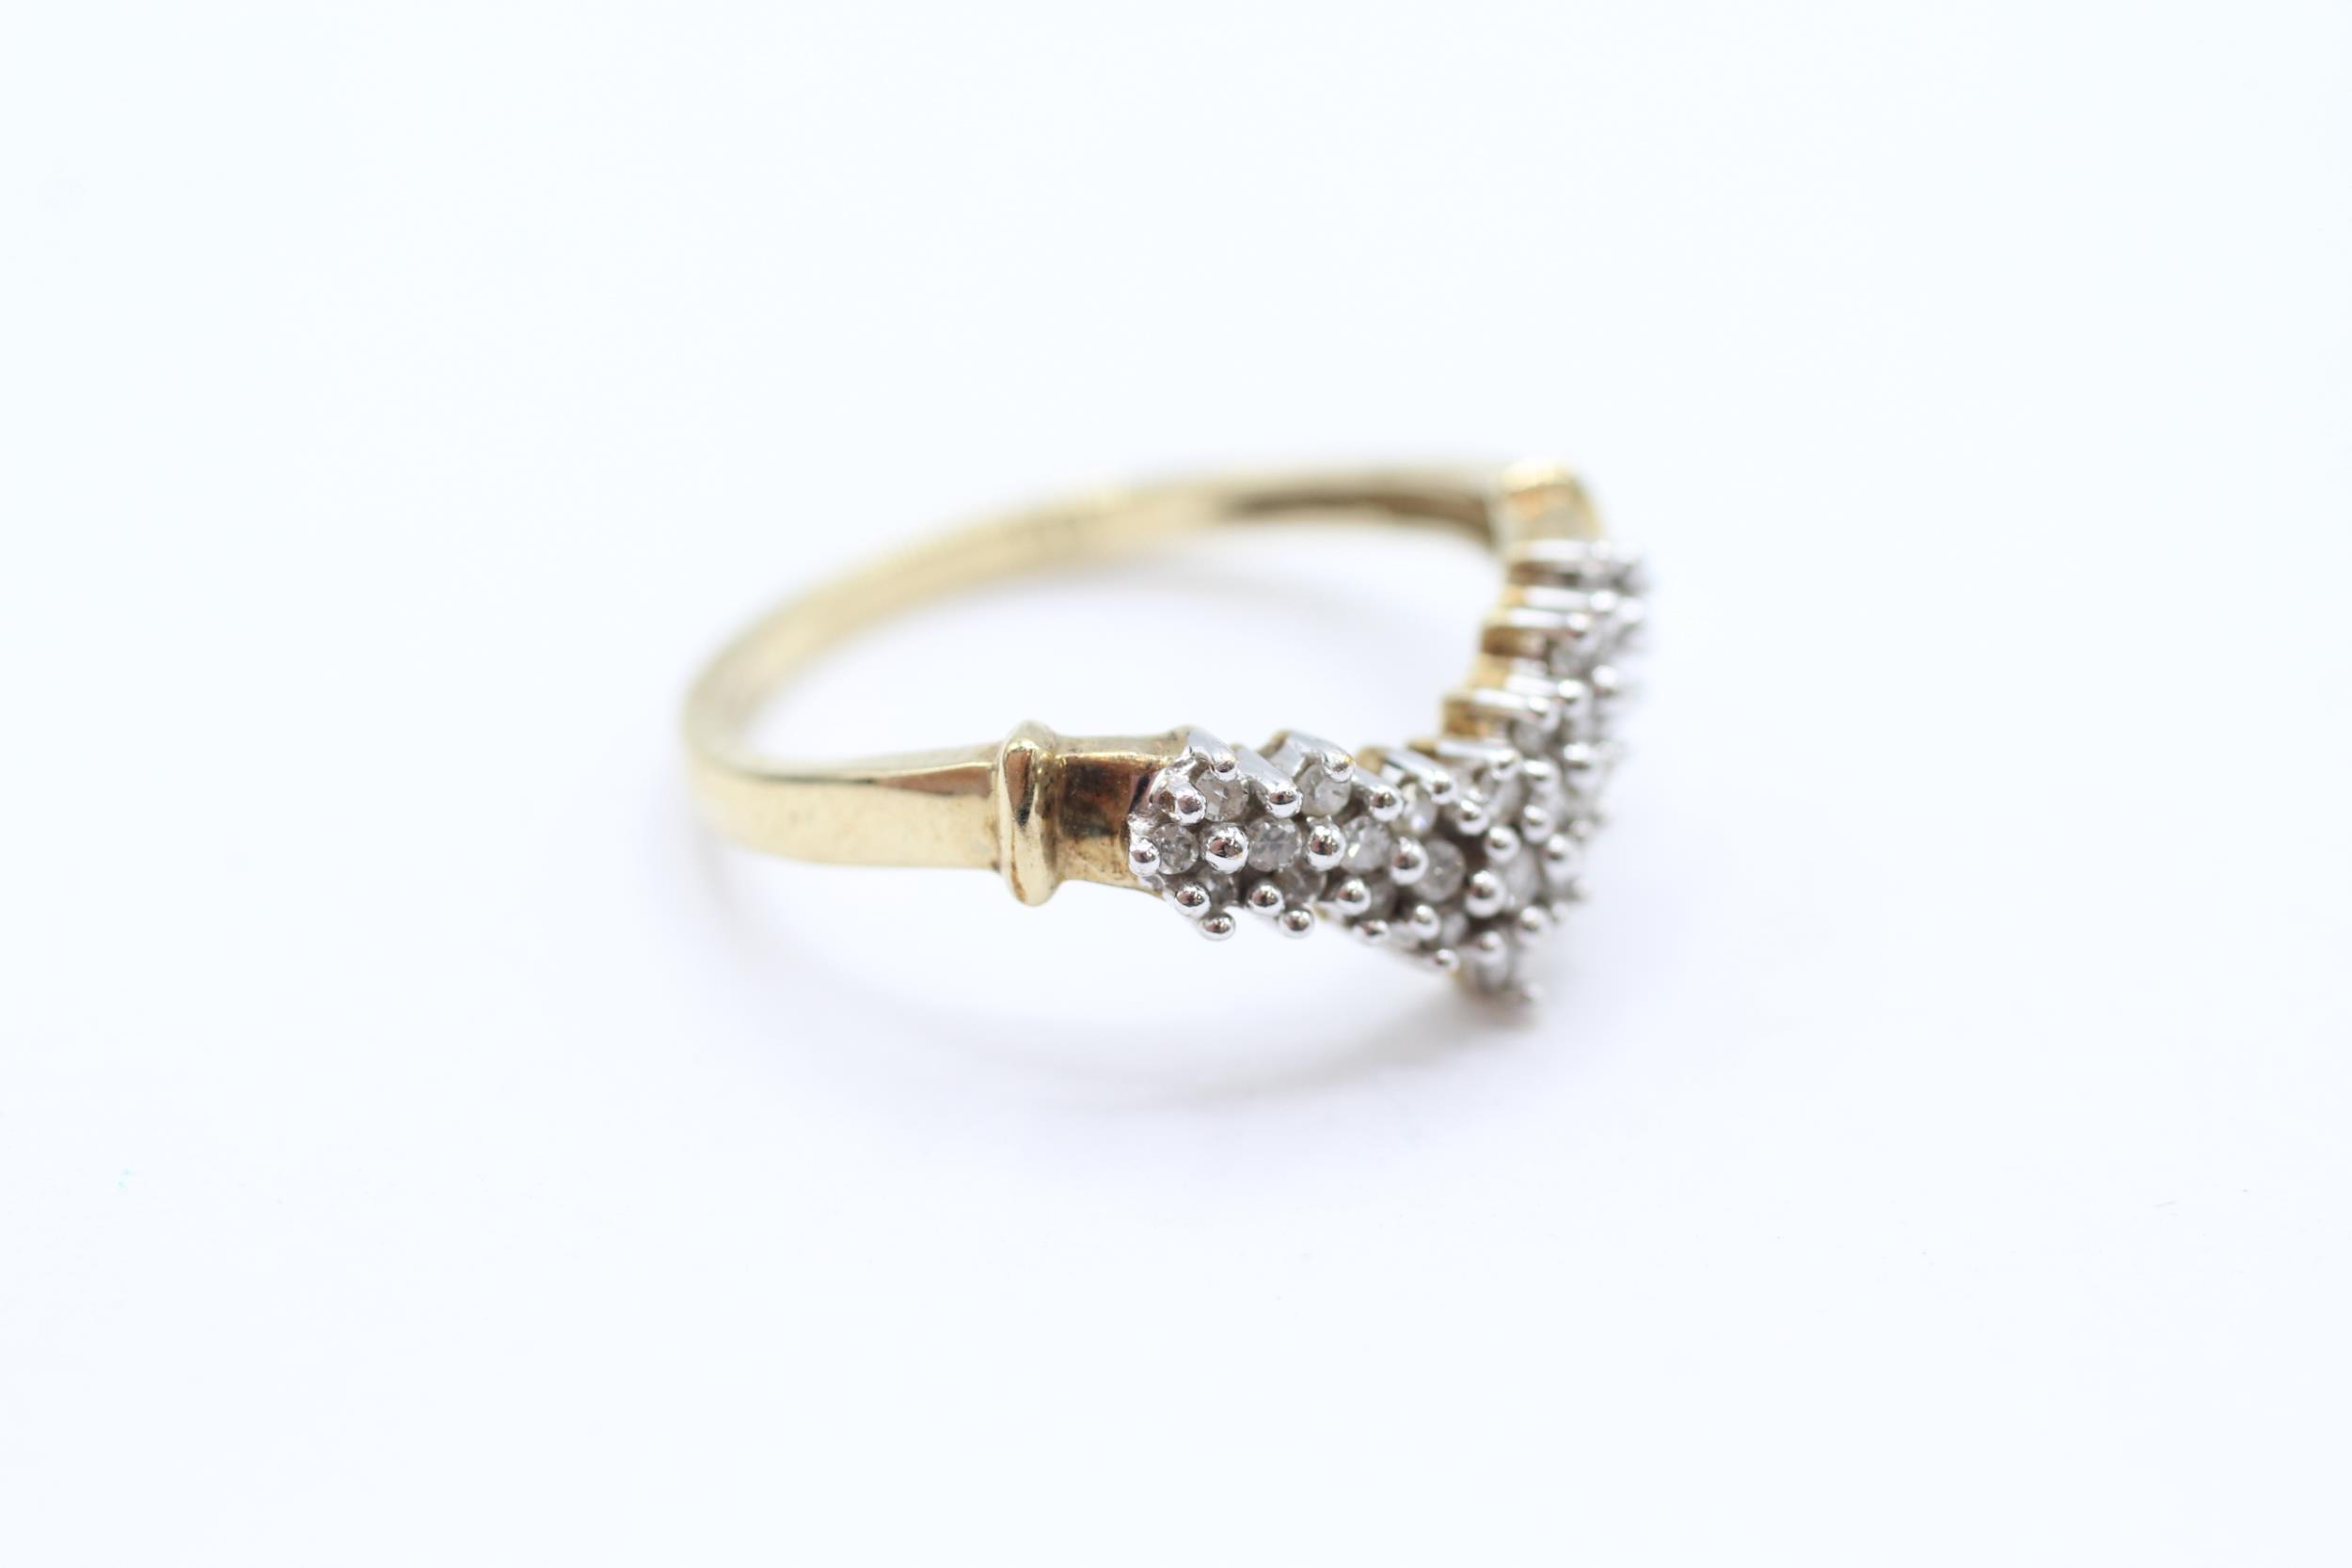 9ct gold pavé set diamond wishbone eternity ring Size M 1.8 g - Image 2 of 4